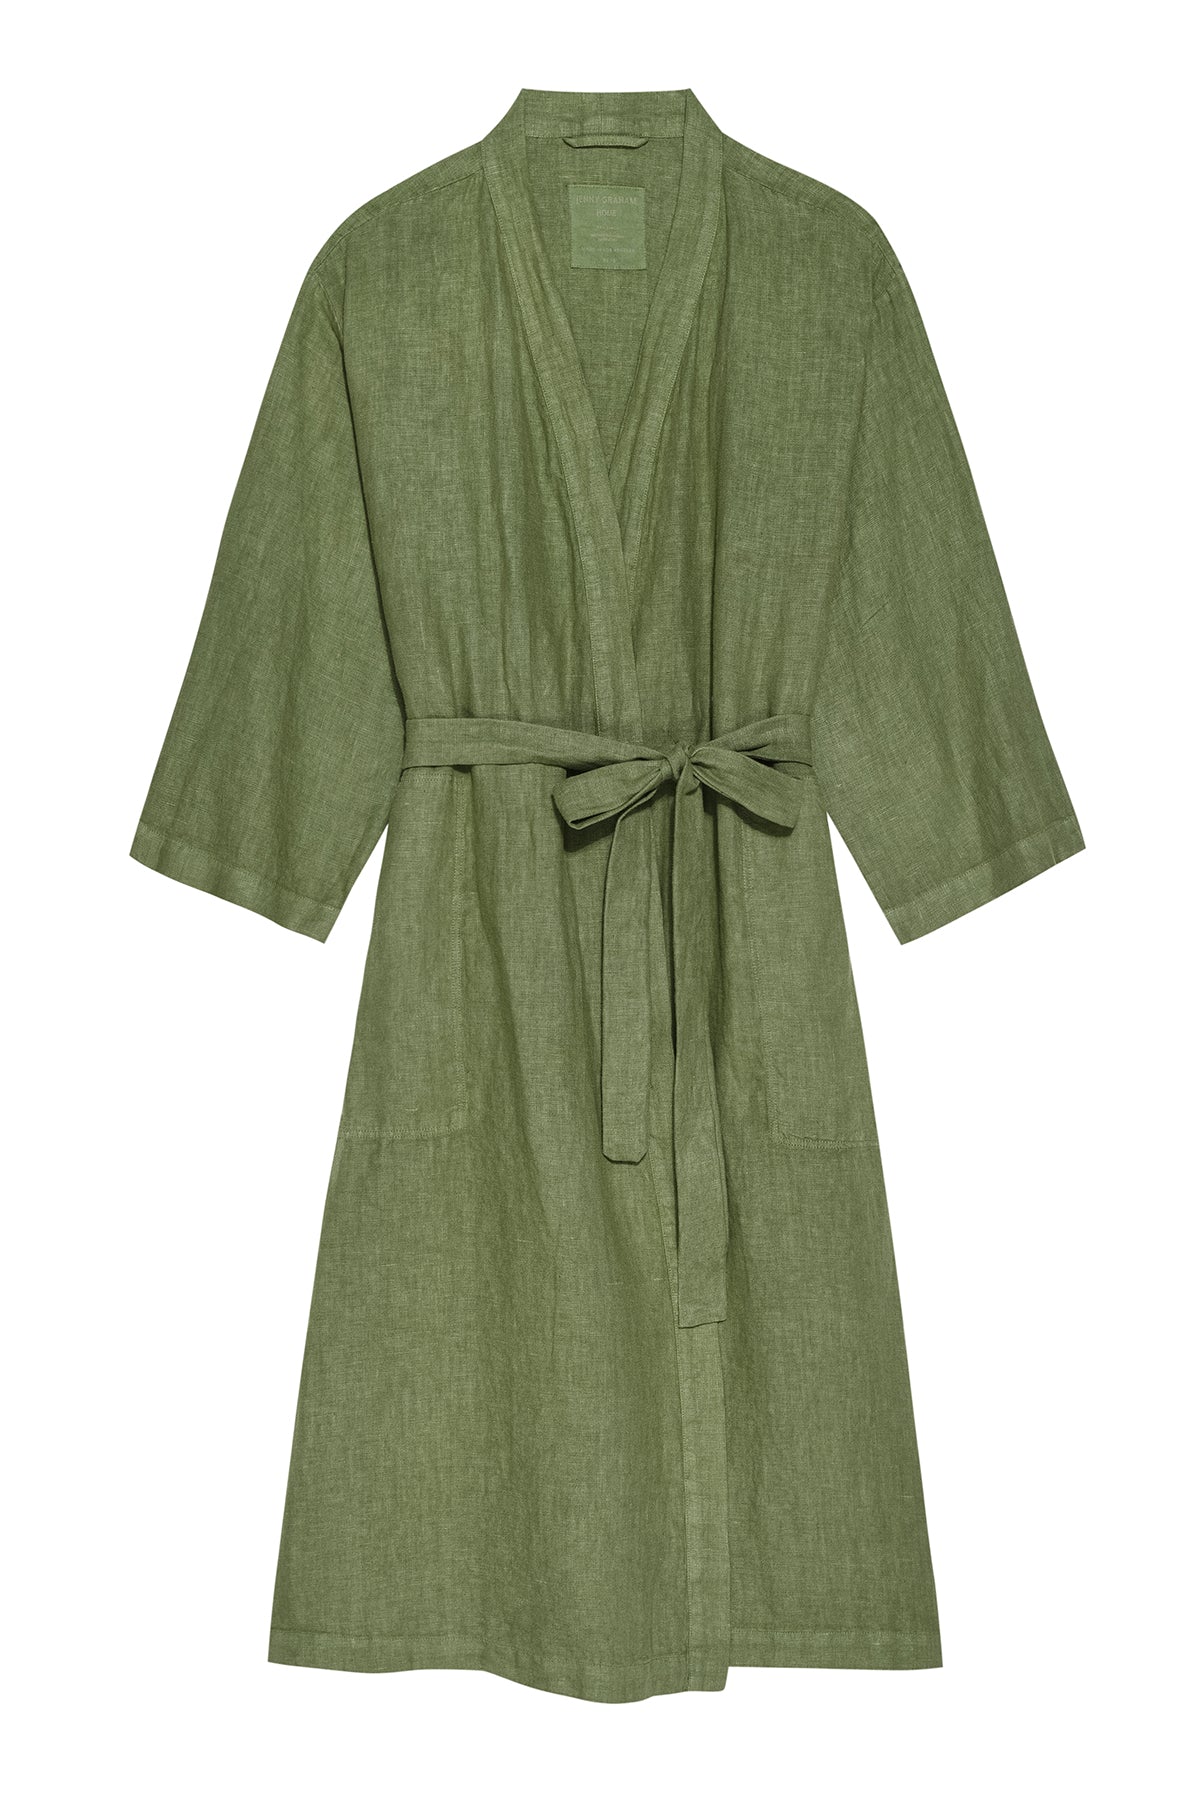 Jenny Graham Linen Robe in basil green flat shot-26310943408321